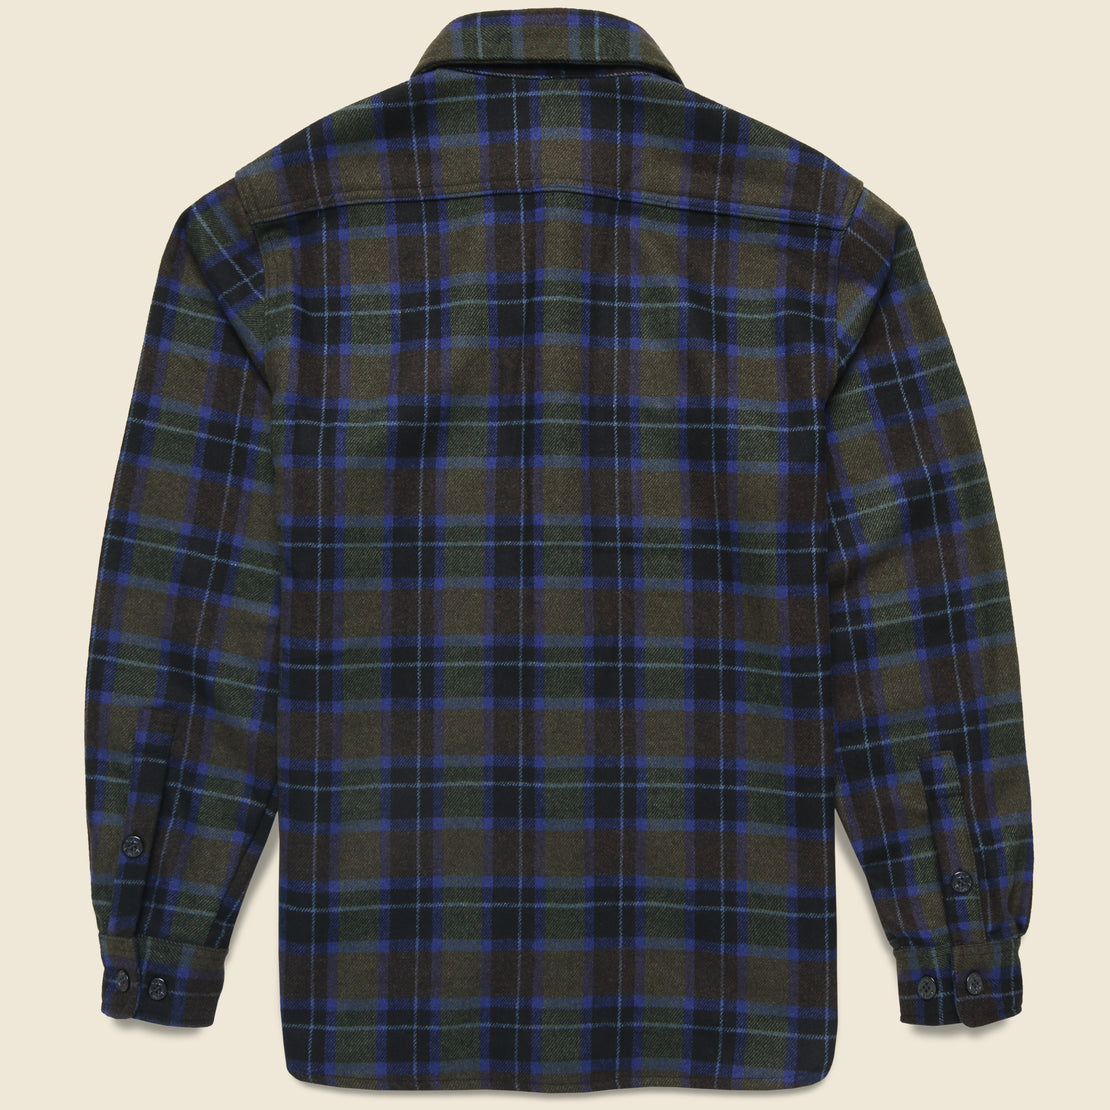 CPO Wool Shirt - Spruce Plaid